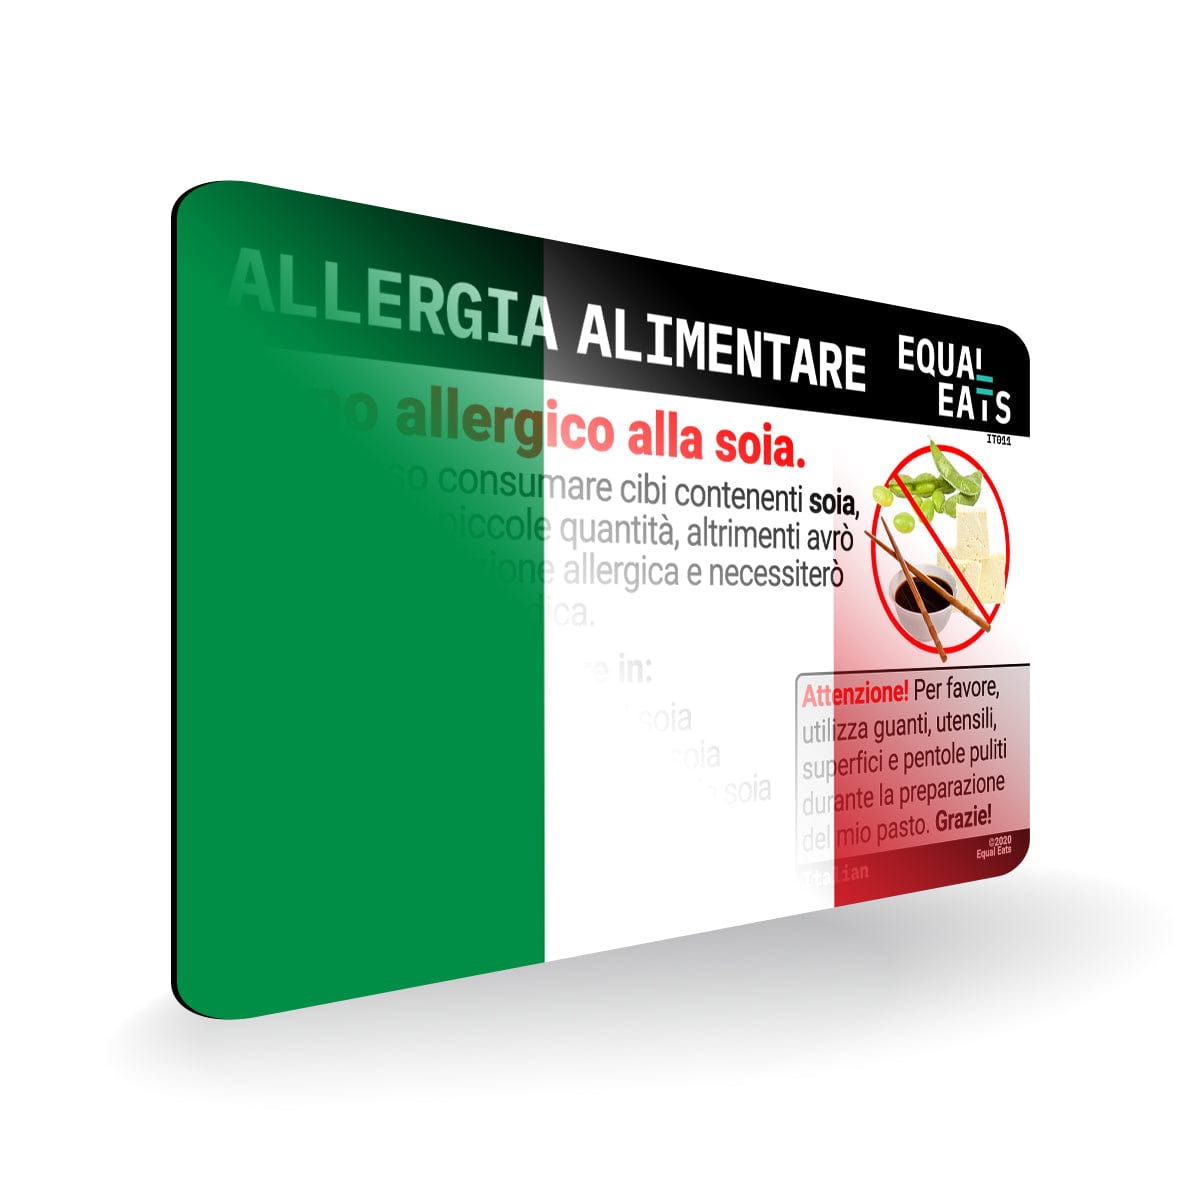 Soy Allergy in Italian. Soy Allergy Card for Italy